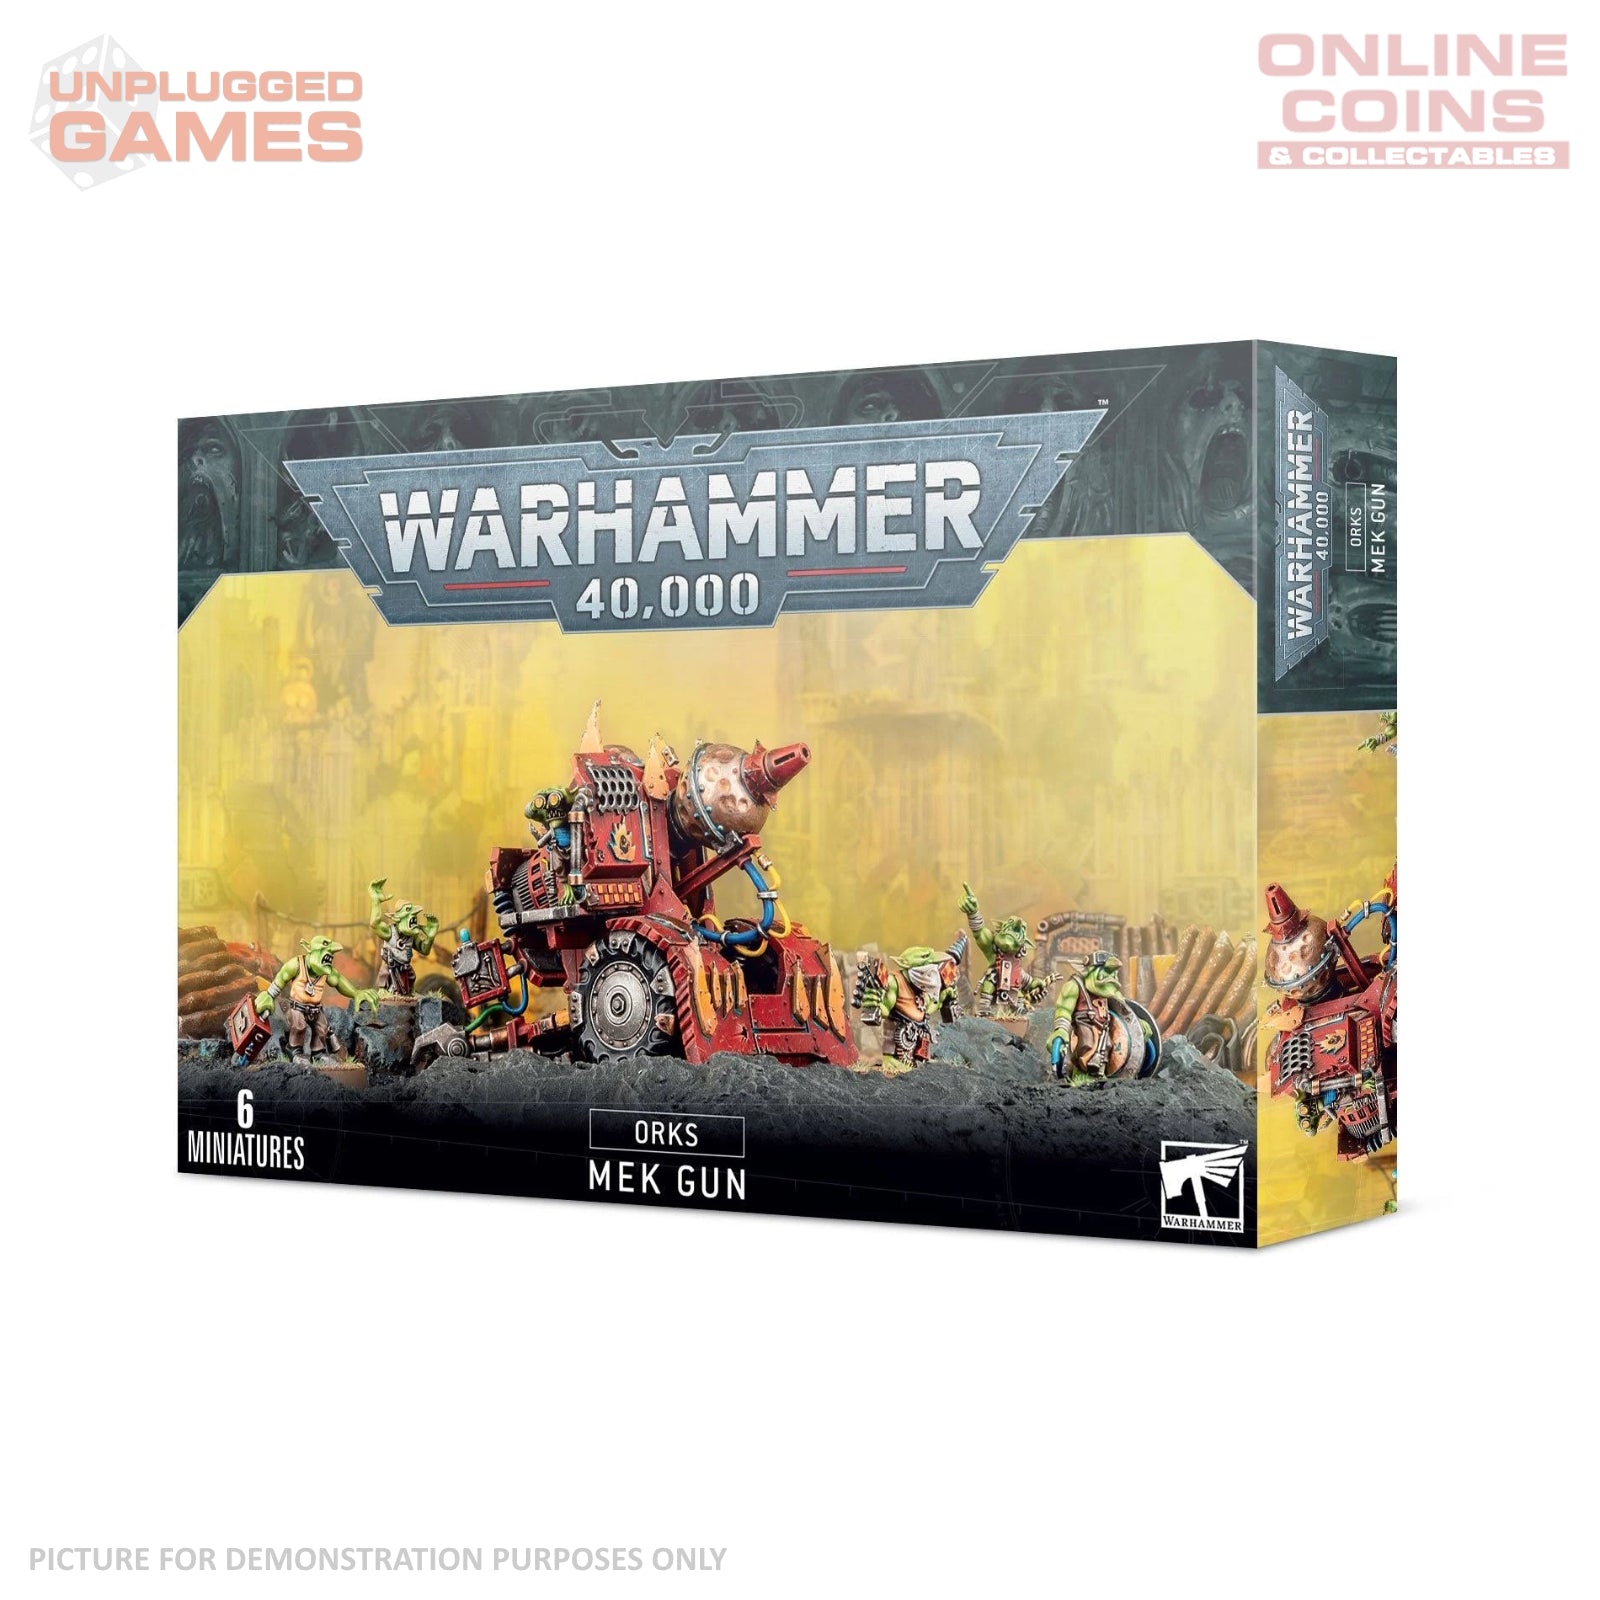 Warhammer 40,000 - Orks Mek Gun